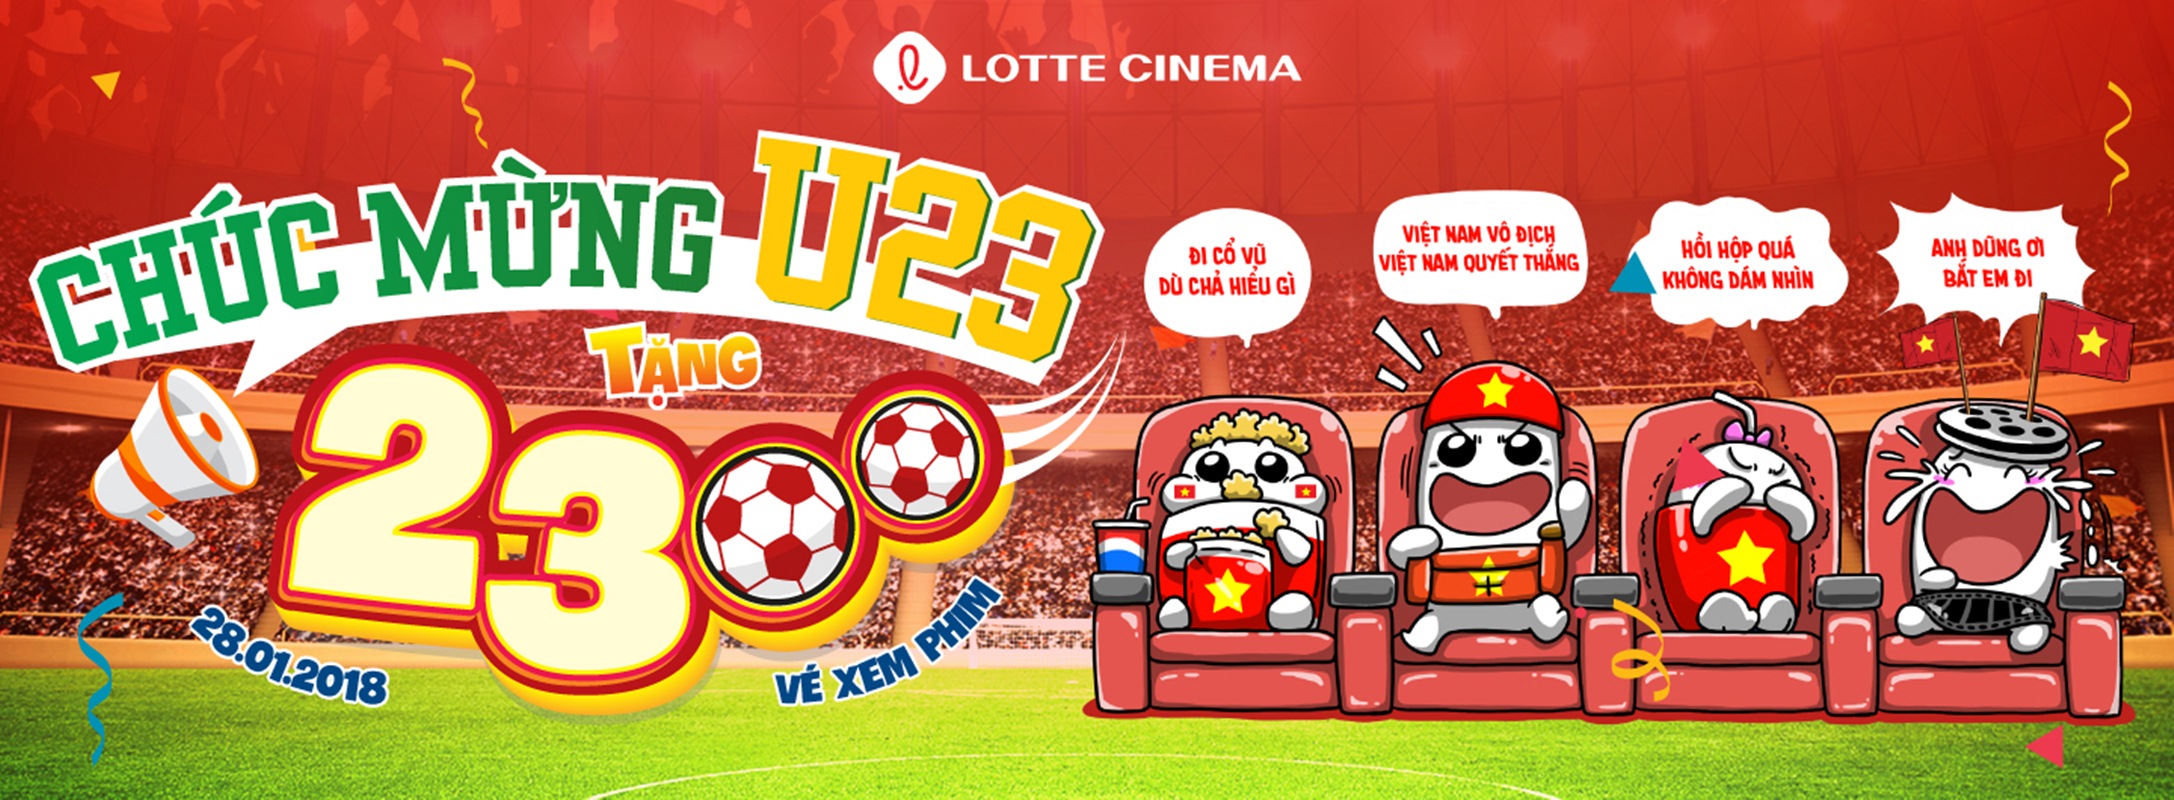 U23 Lotte Cinema Tang 2300 Ve Chuc Mung Doi U23 1920x1080